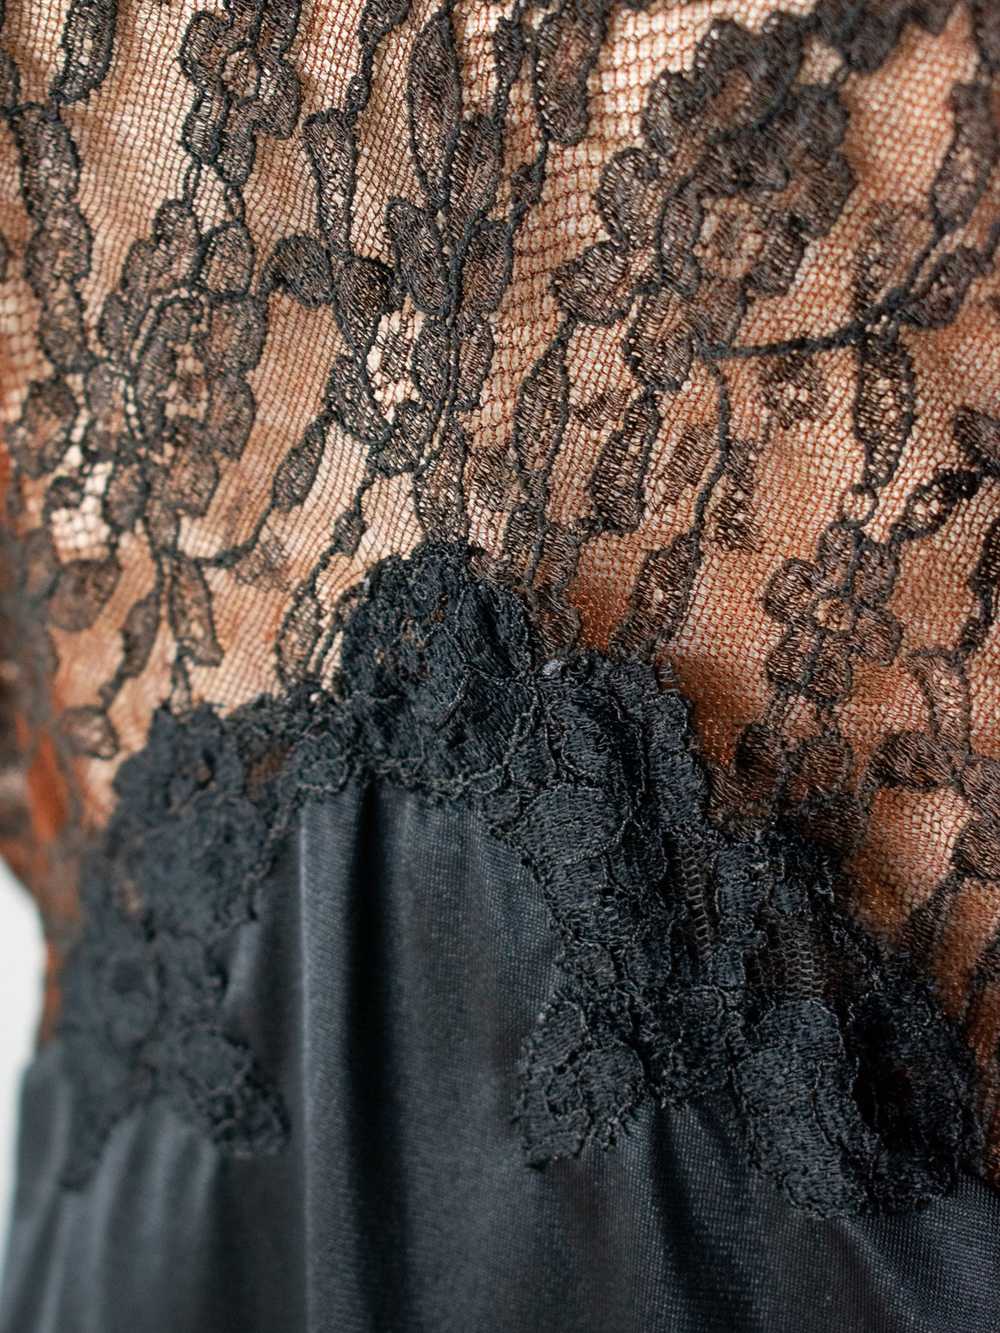 Vintage Brown & Black Lace Slip Dress Medium - image 5